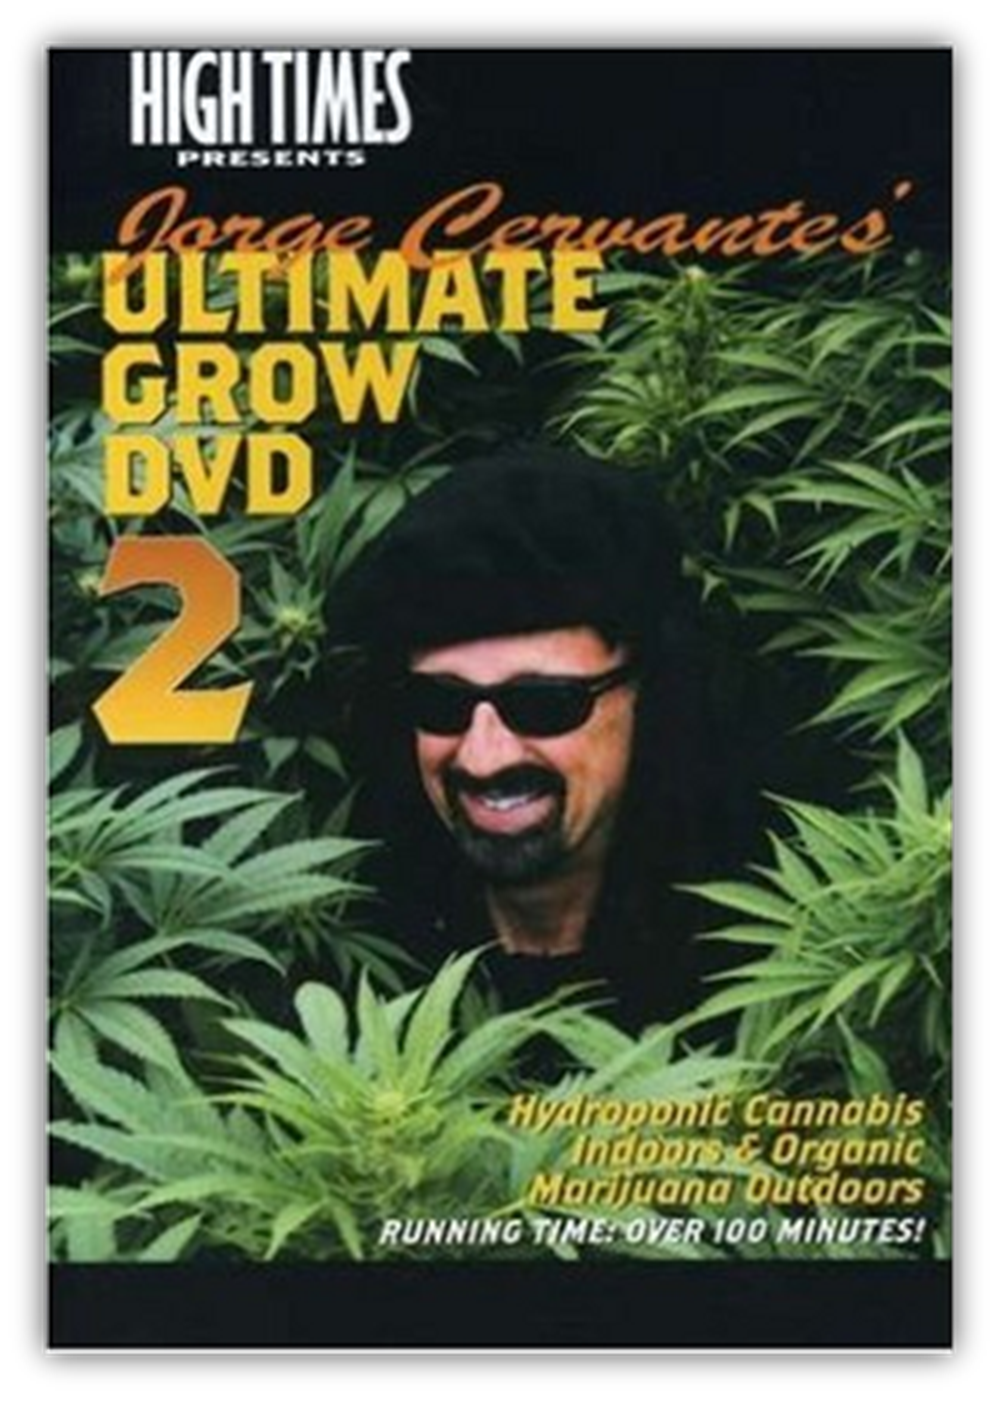 ULTIMATE GROW Vol 2 DVD